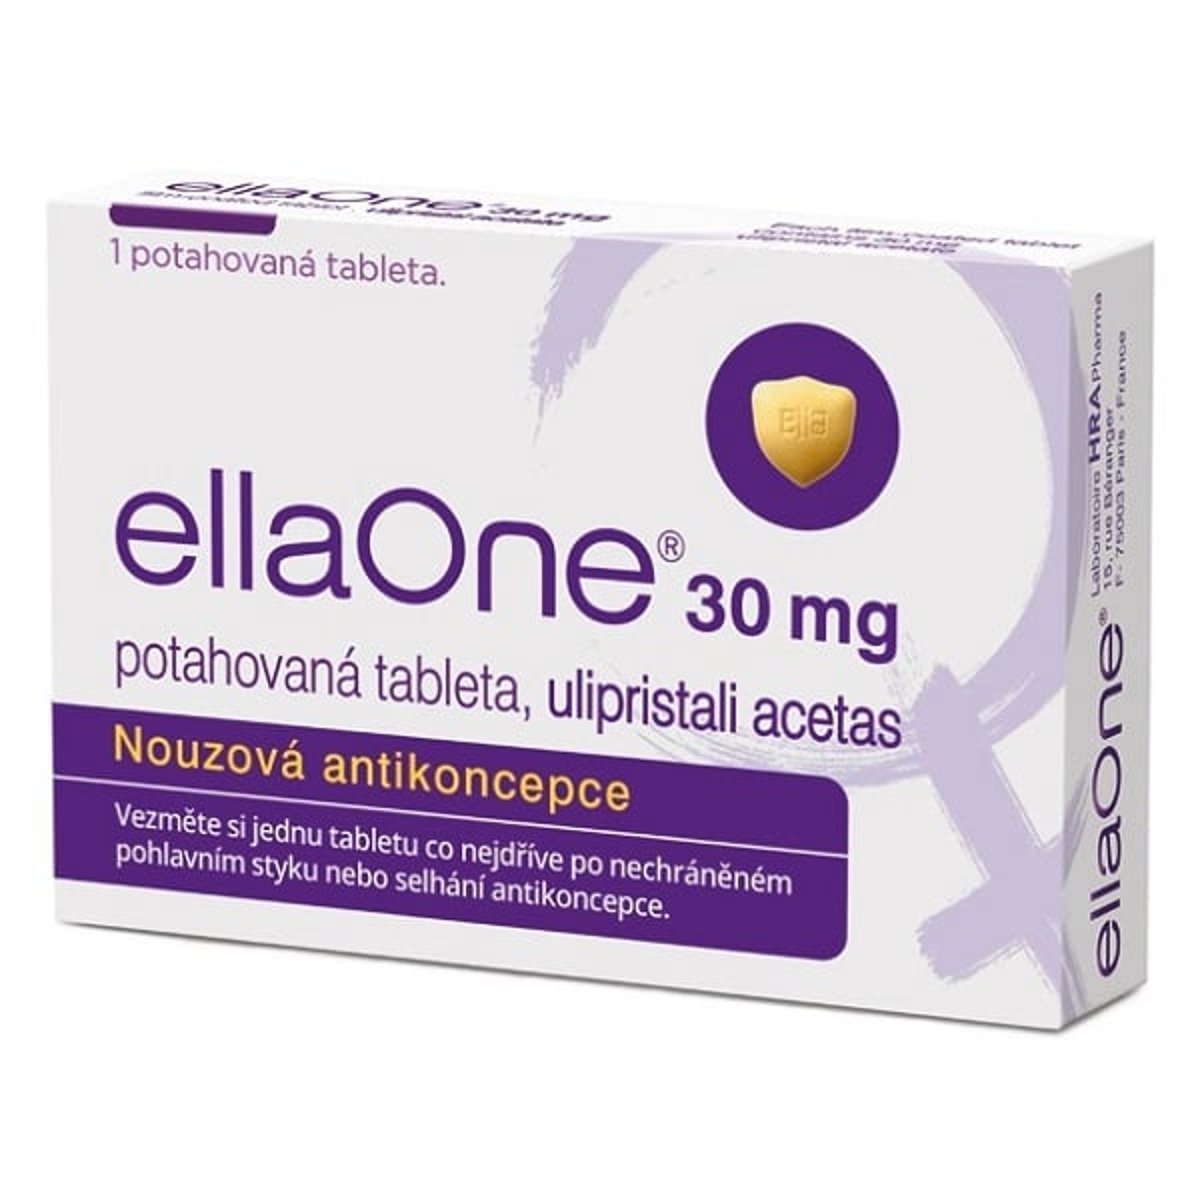 ELLAONE 30MG Potahovaná tableta 1 II